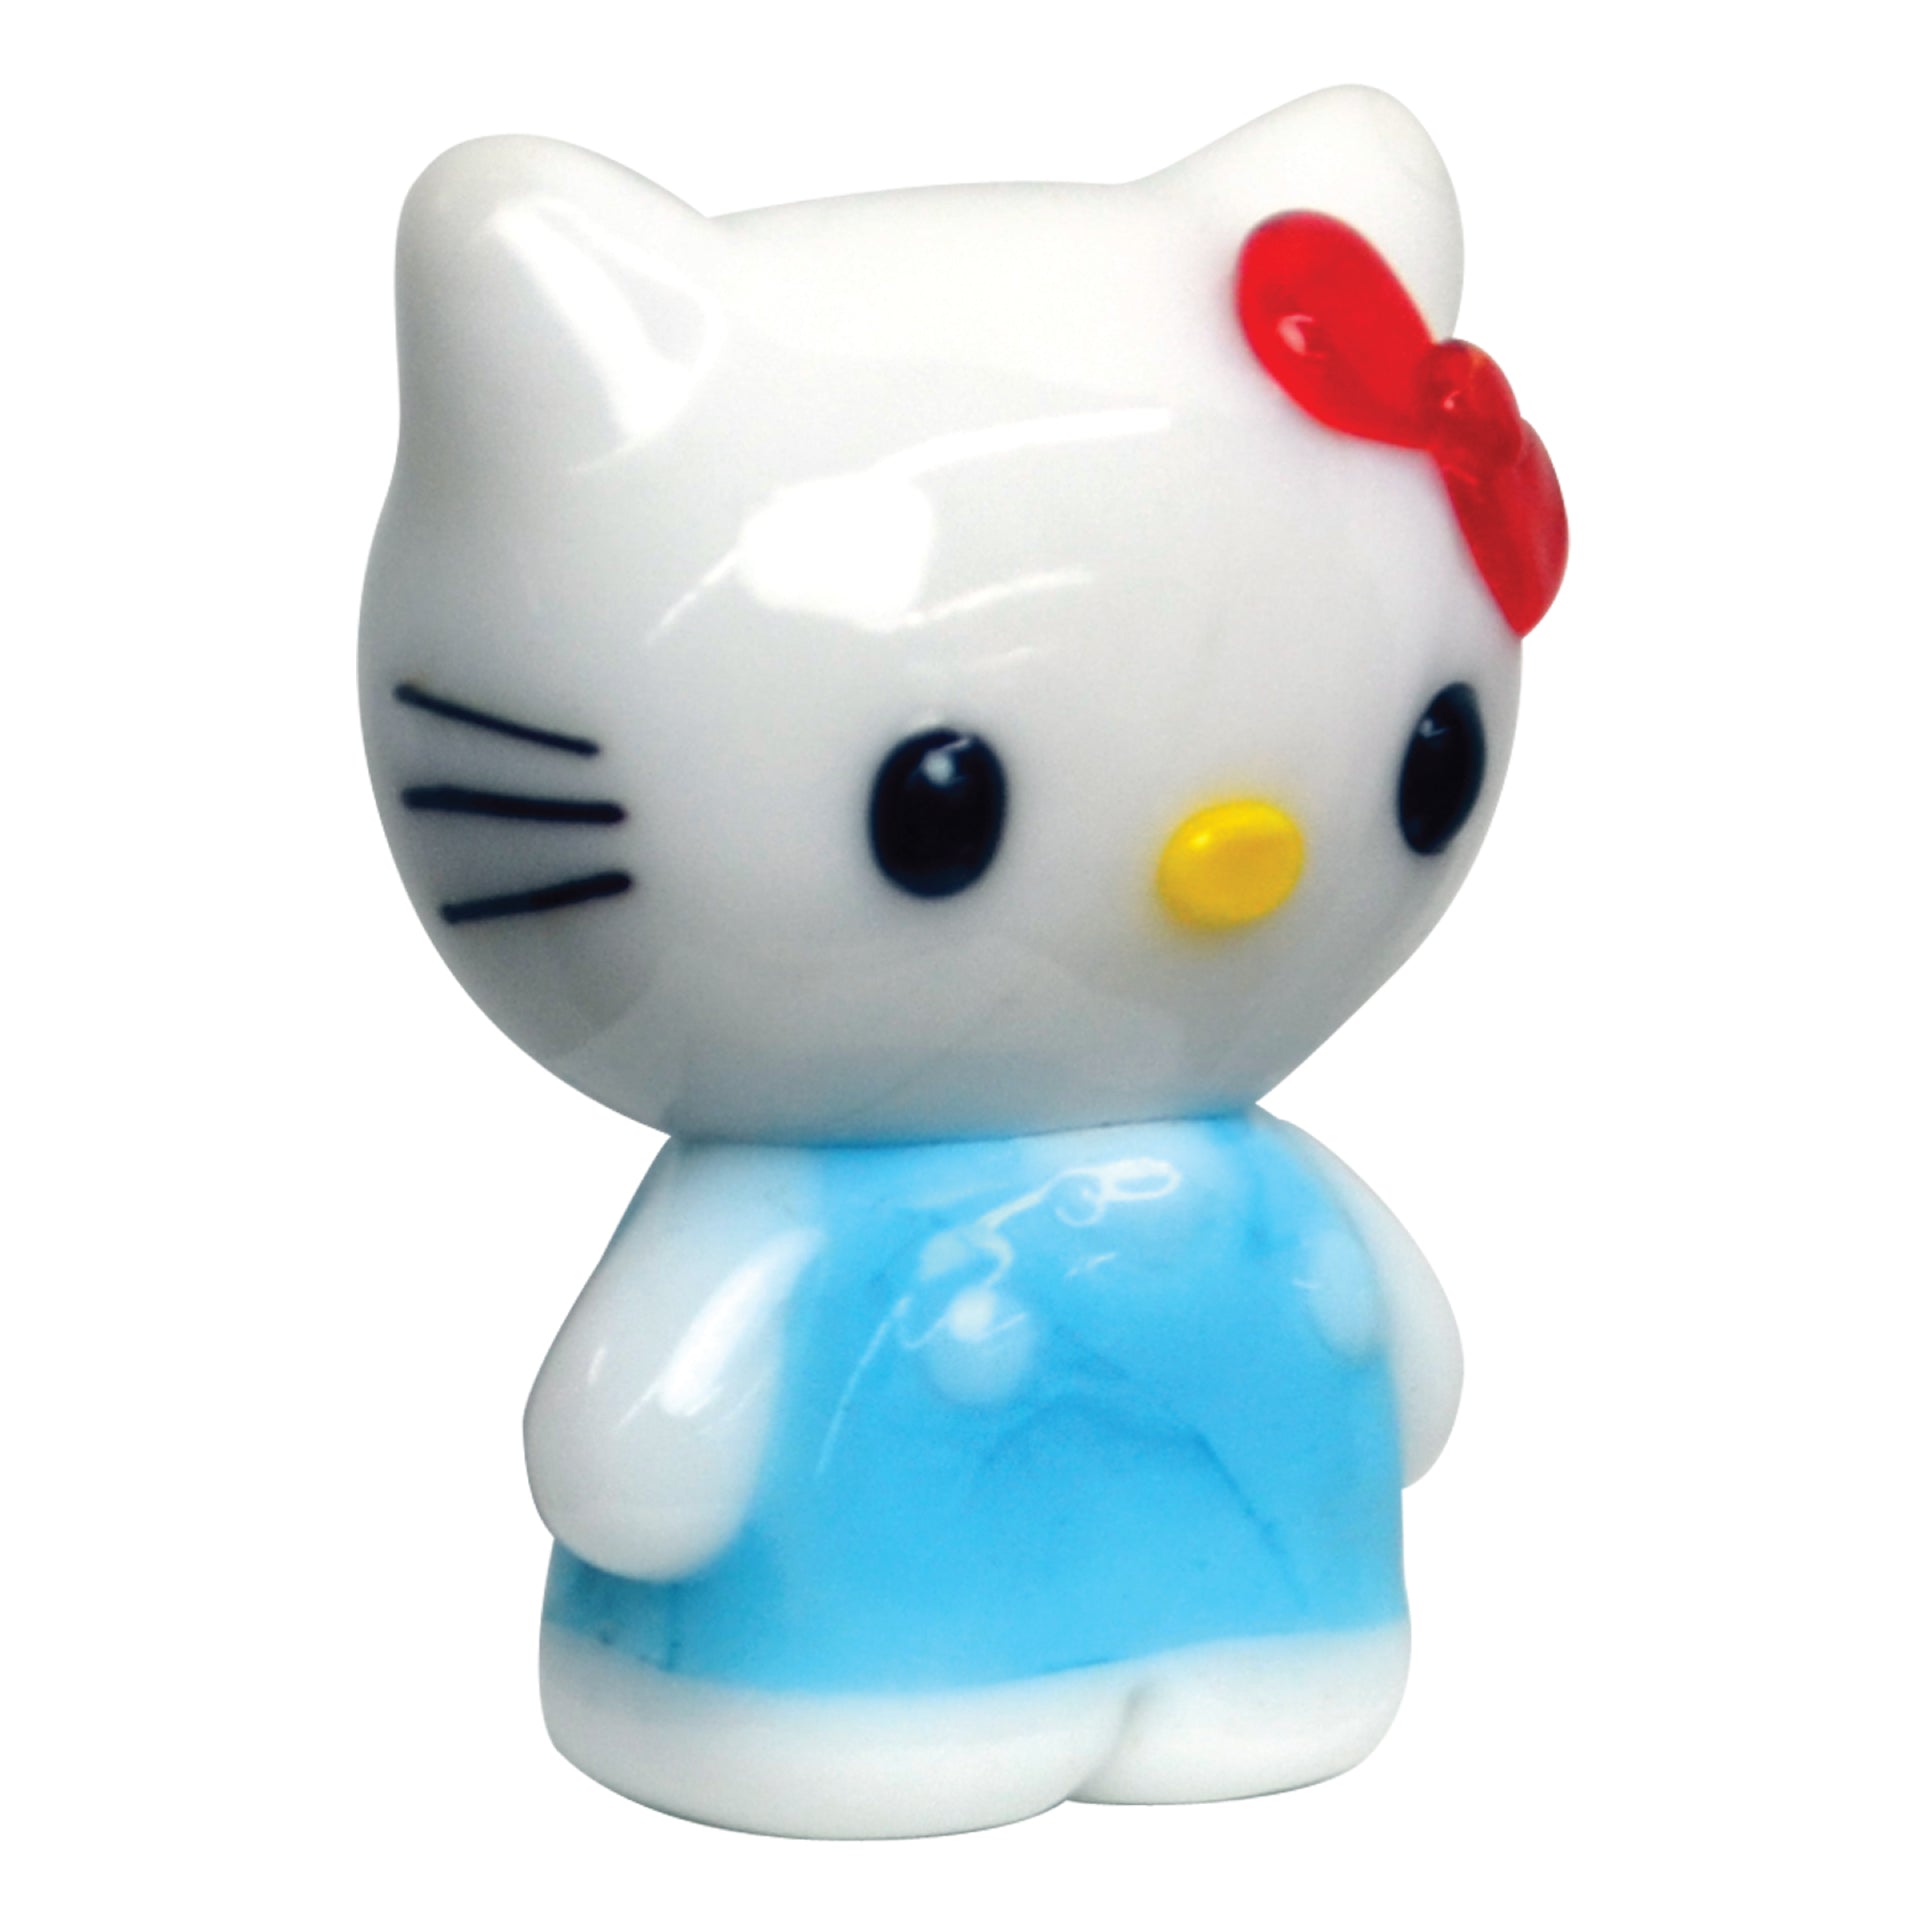 GlassWorld Hello Kitty Hello Kittyin Blue collectible miniature glass figurine Product Image